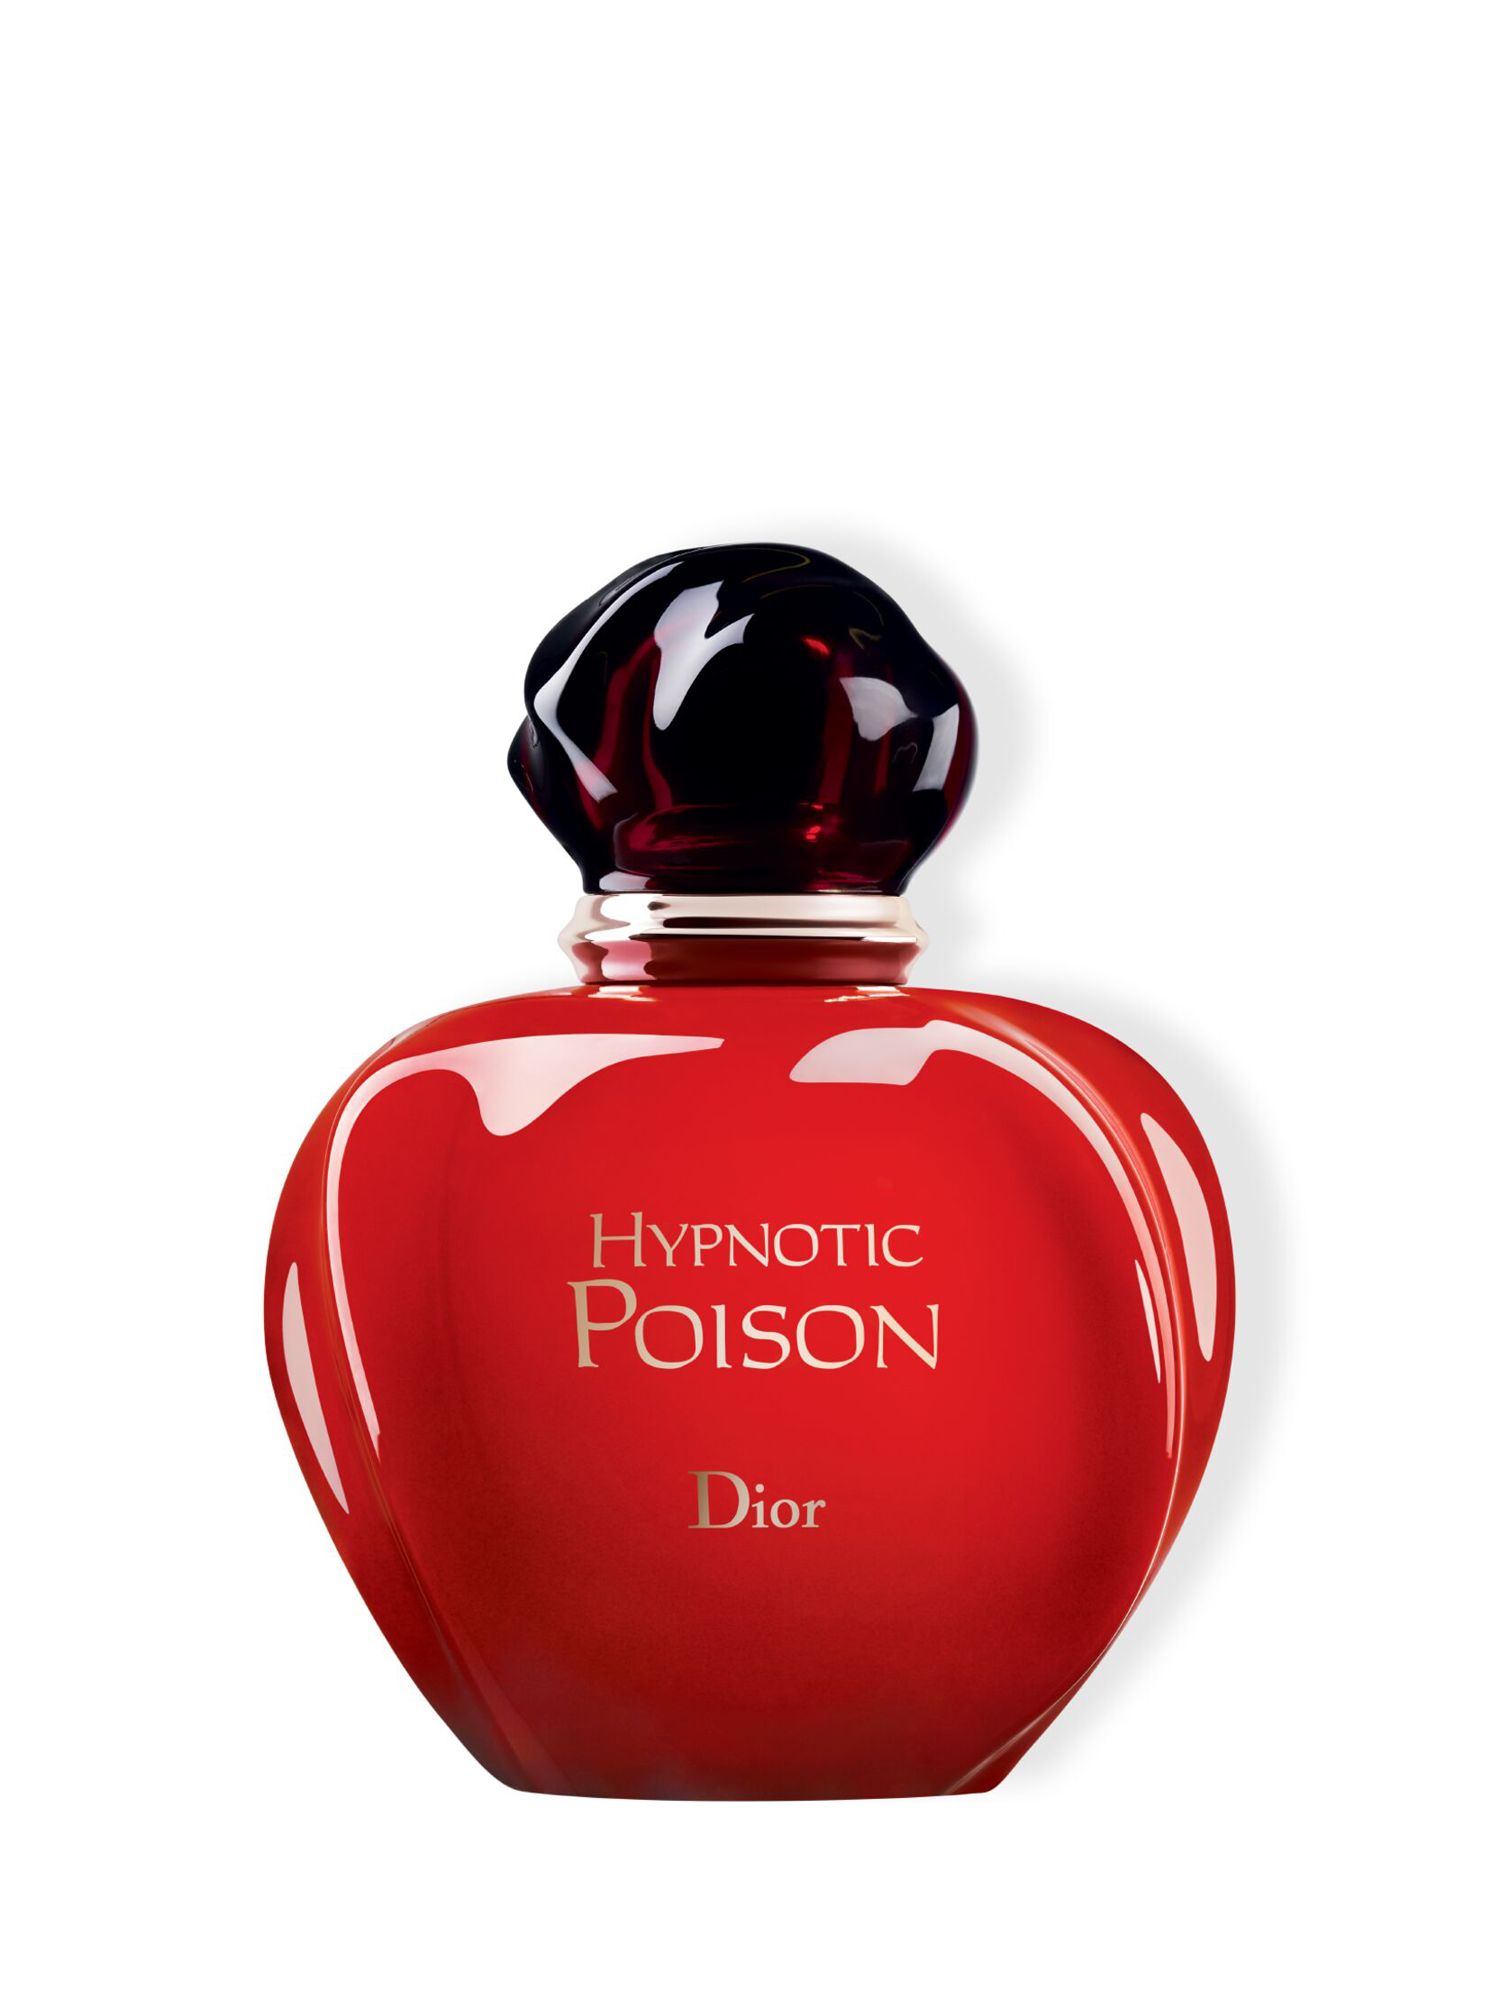 poison hypnotic christian dior